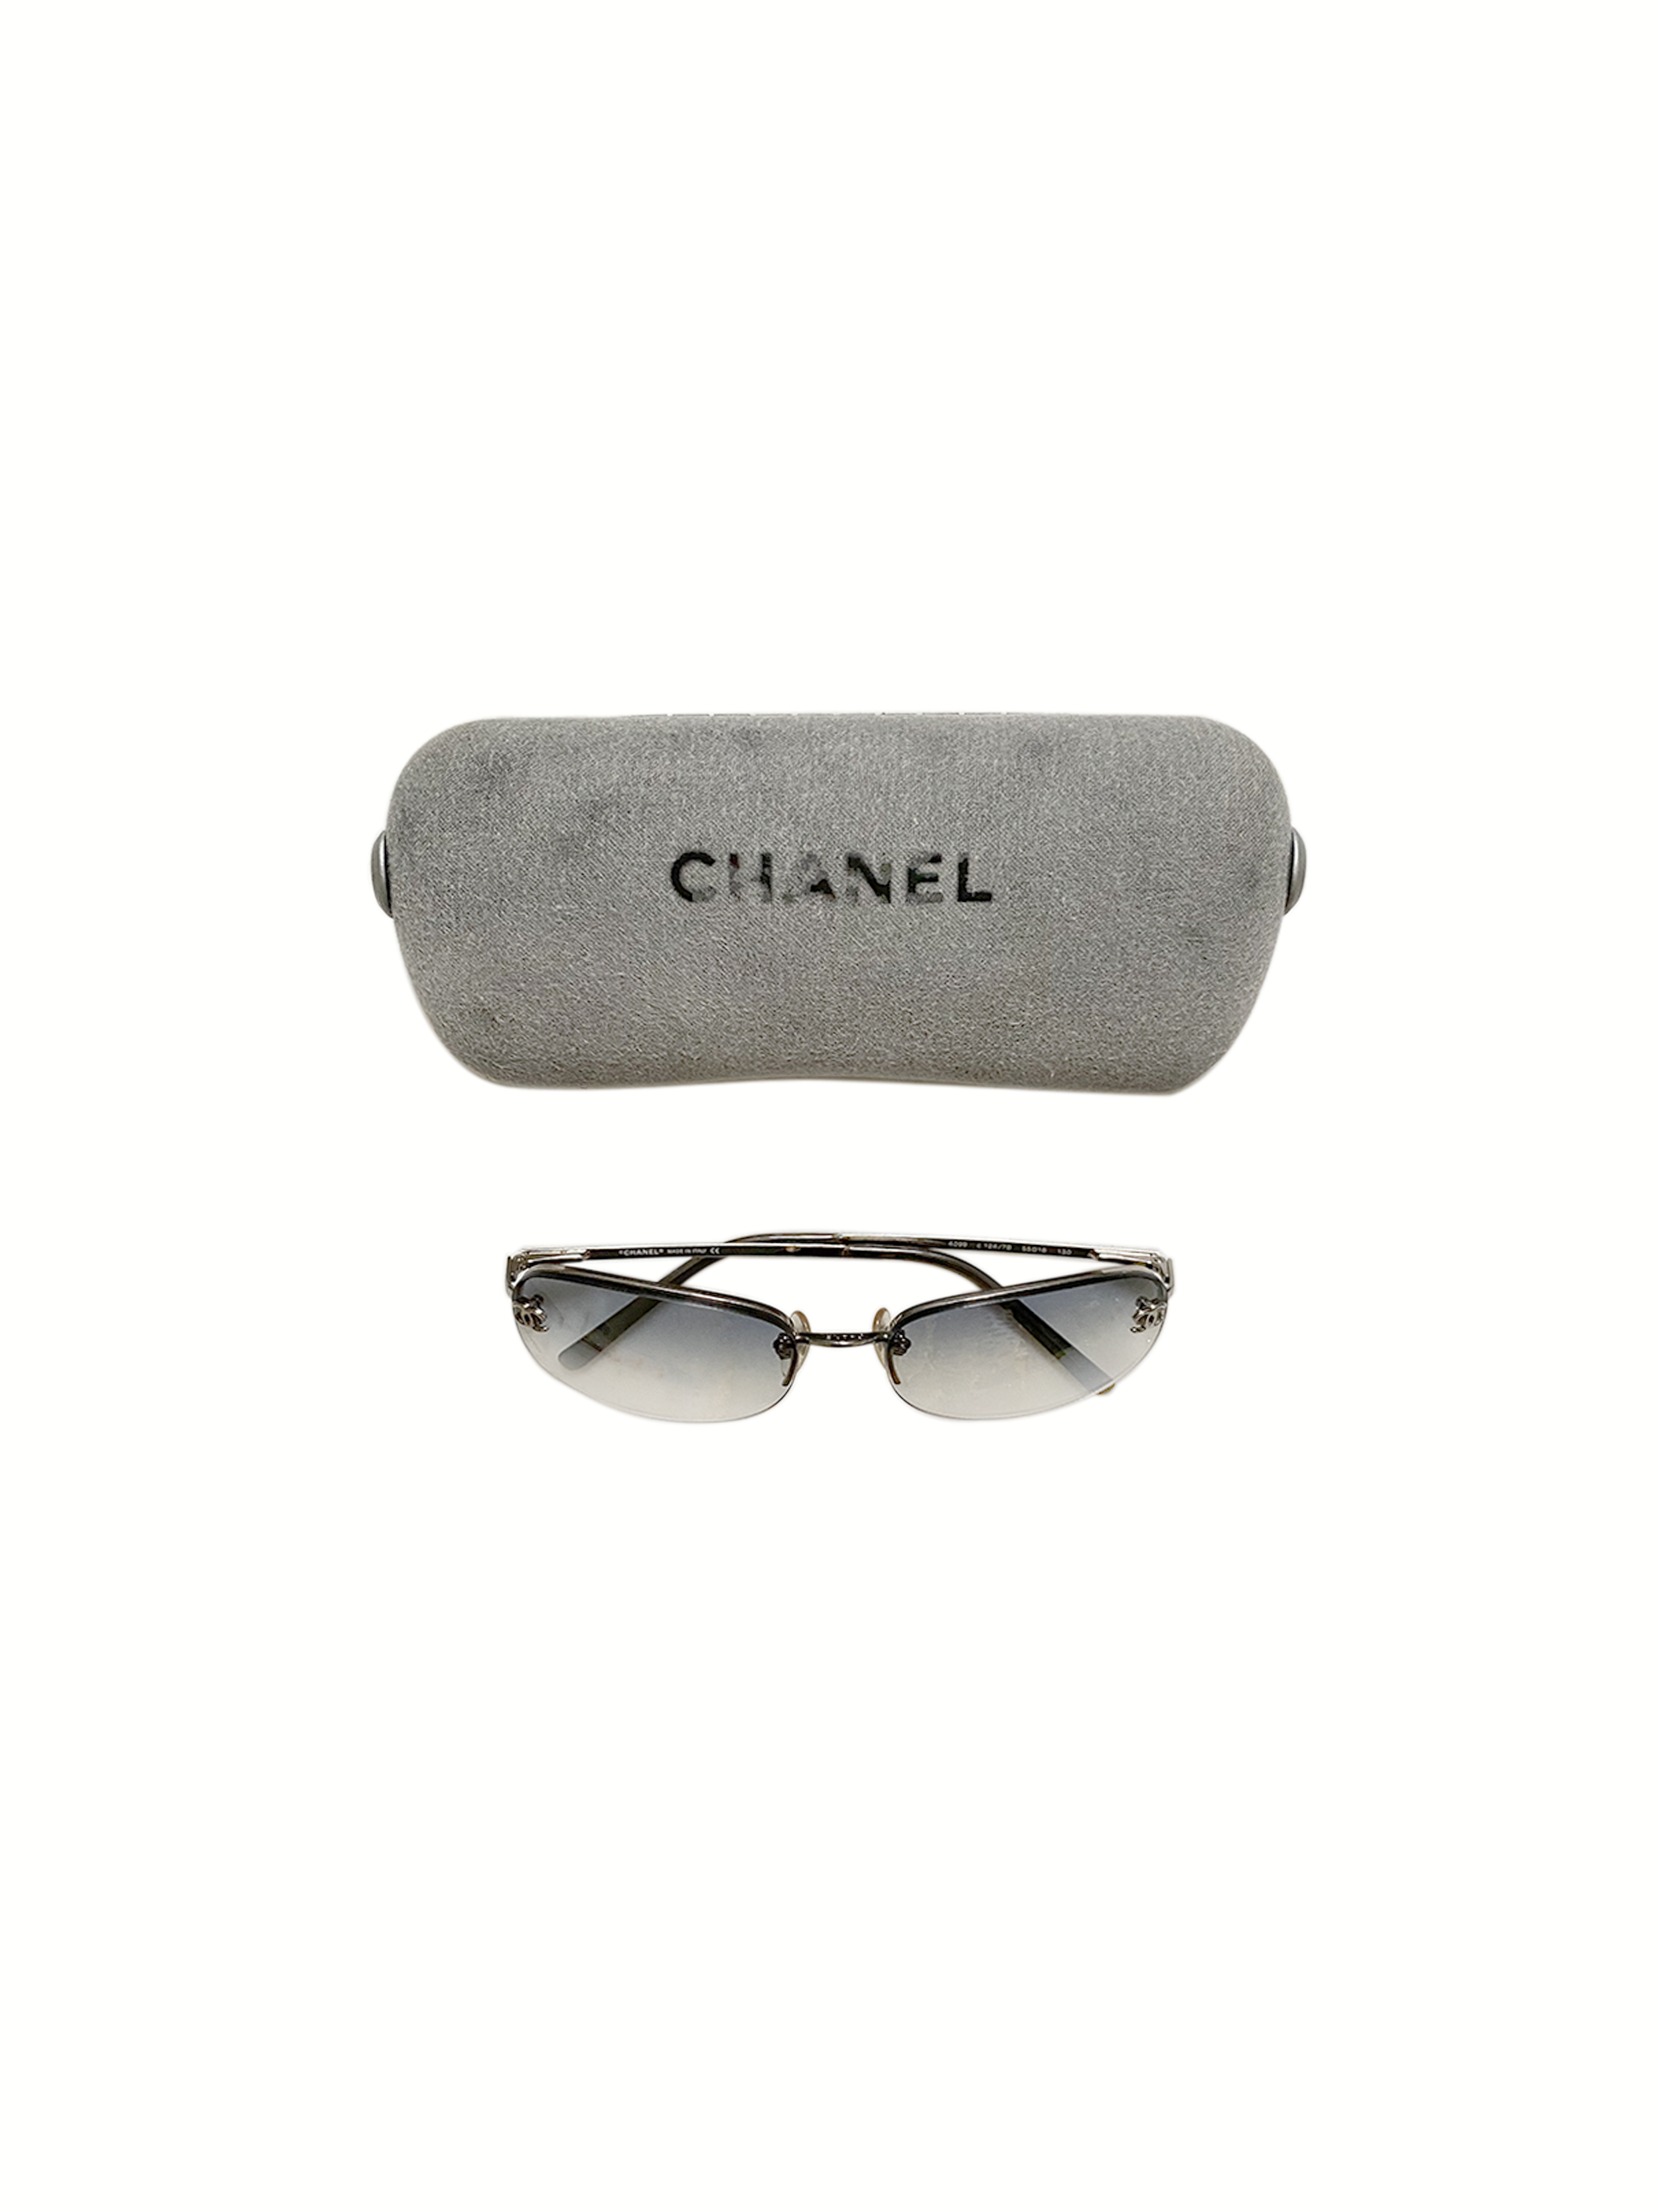 Chanel Round Sunglasses, Blue